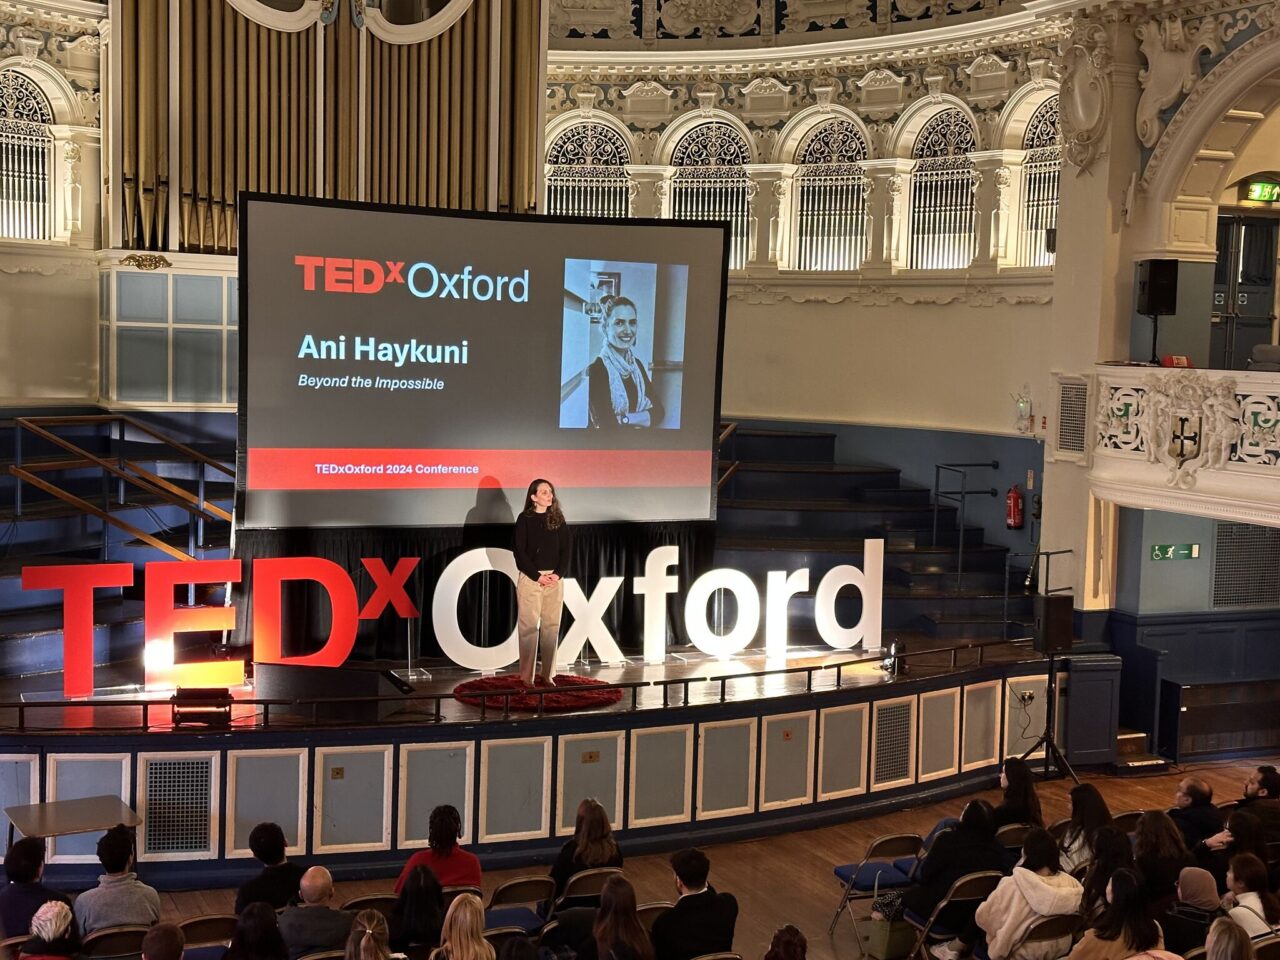 Ani Haykuni: I was so pleased to speak at TEDxOxford last Saturday